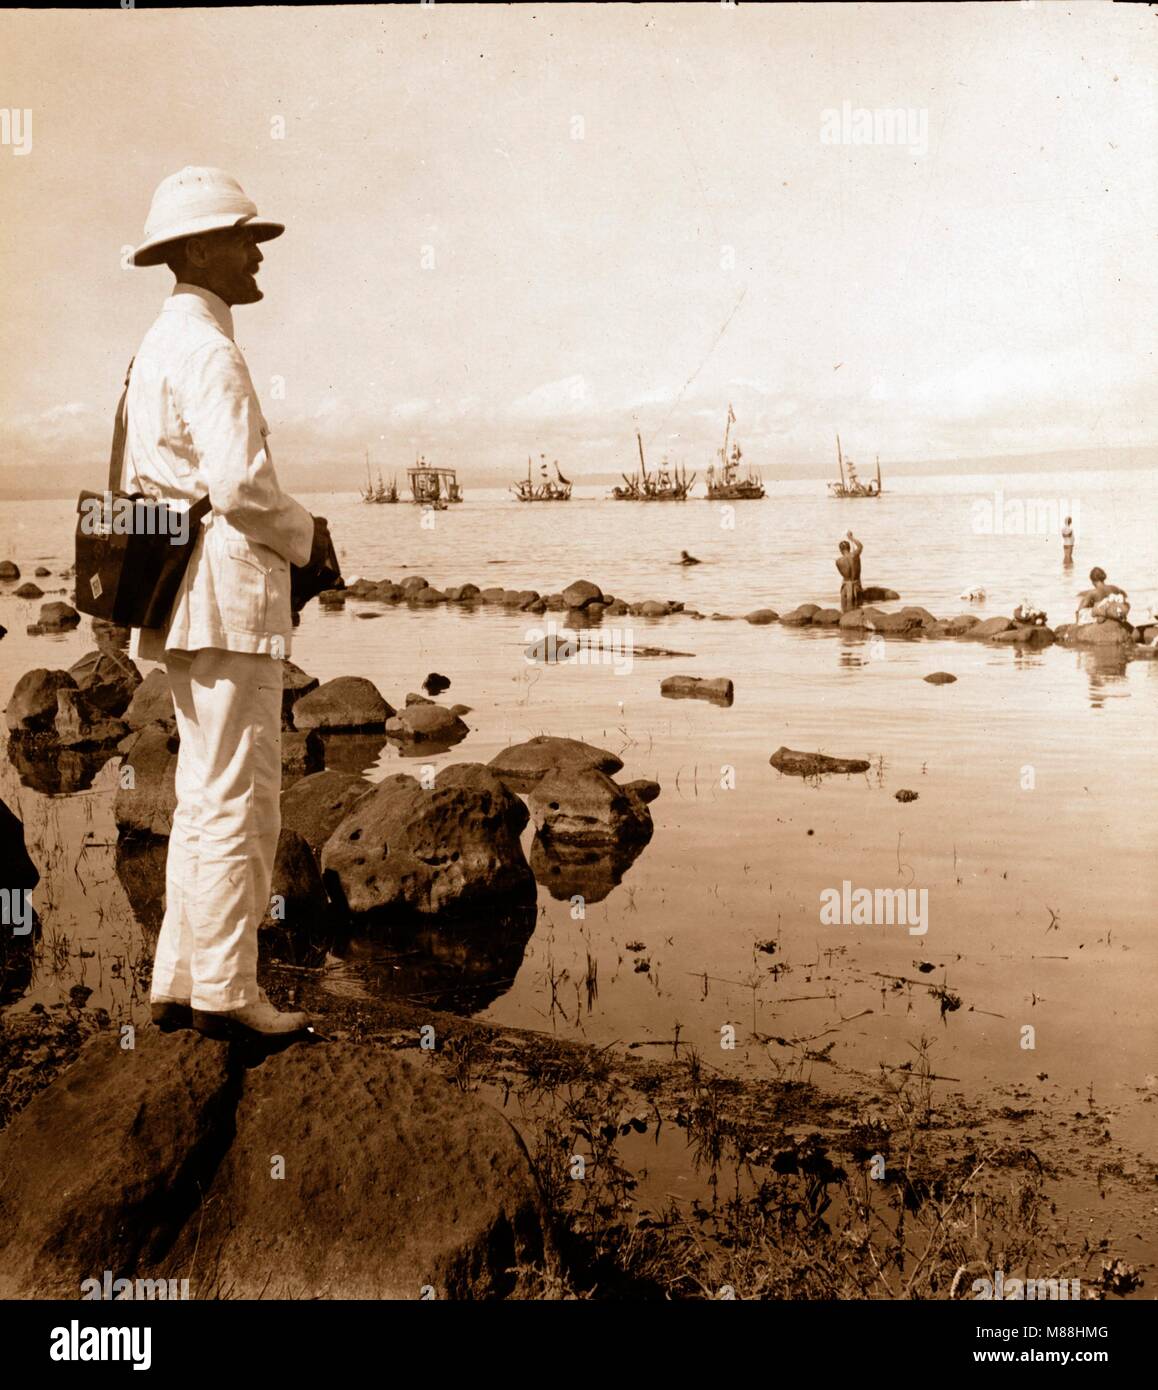 Burton Holmes en Asie, 1908 Banque D'Images